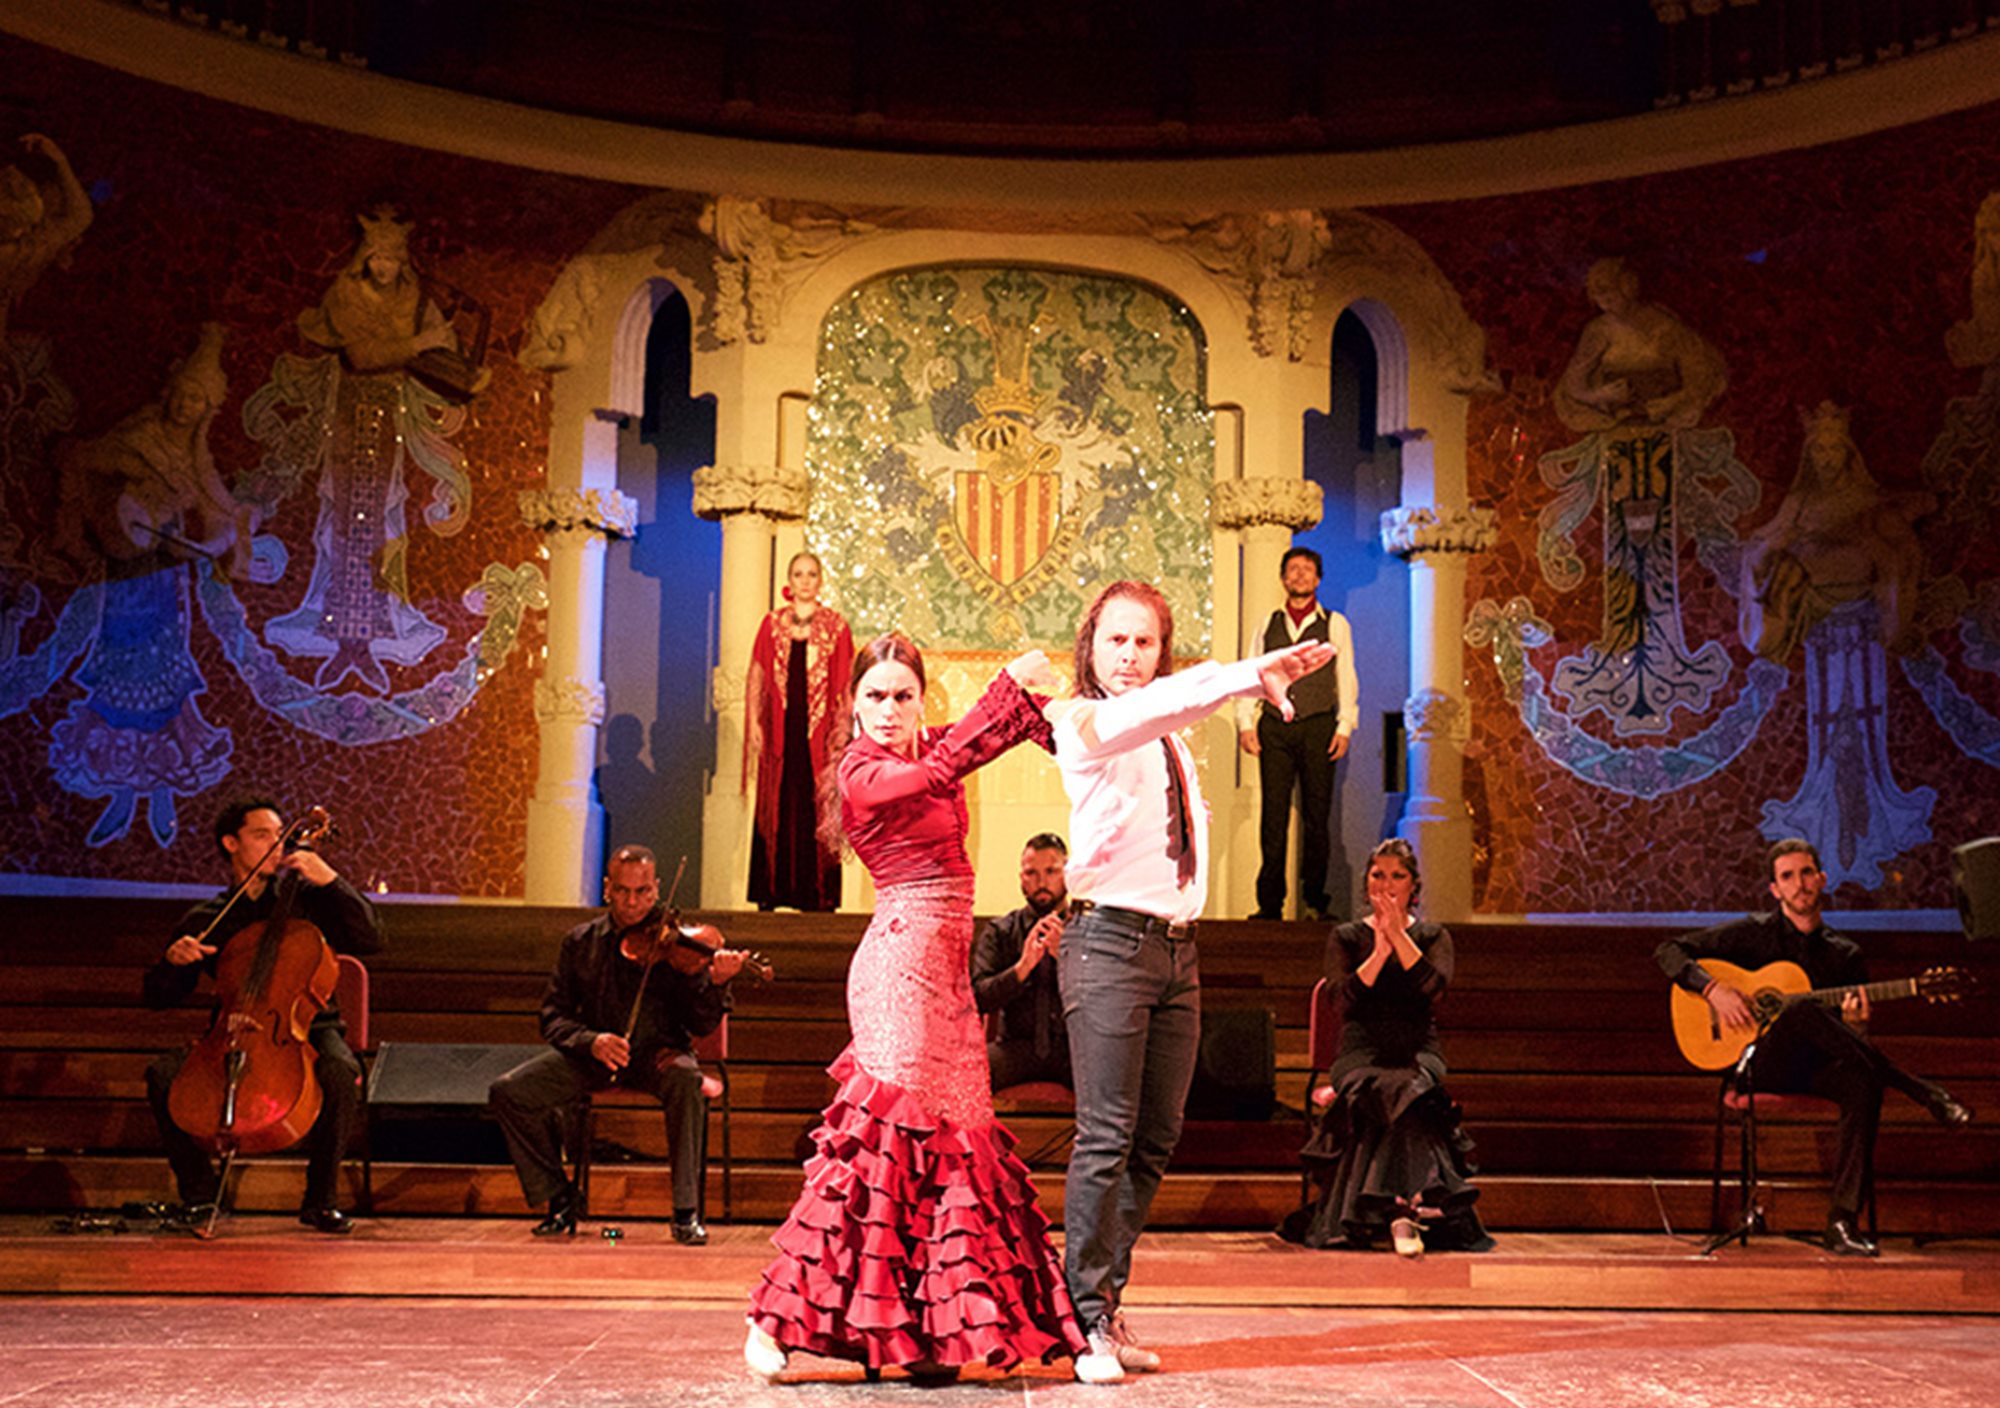 reservieren tickets besucht Touren Fahrkarte karte karten Eintrittskarten Oper Flamenco show in Palau de la Musica barcelona